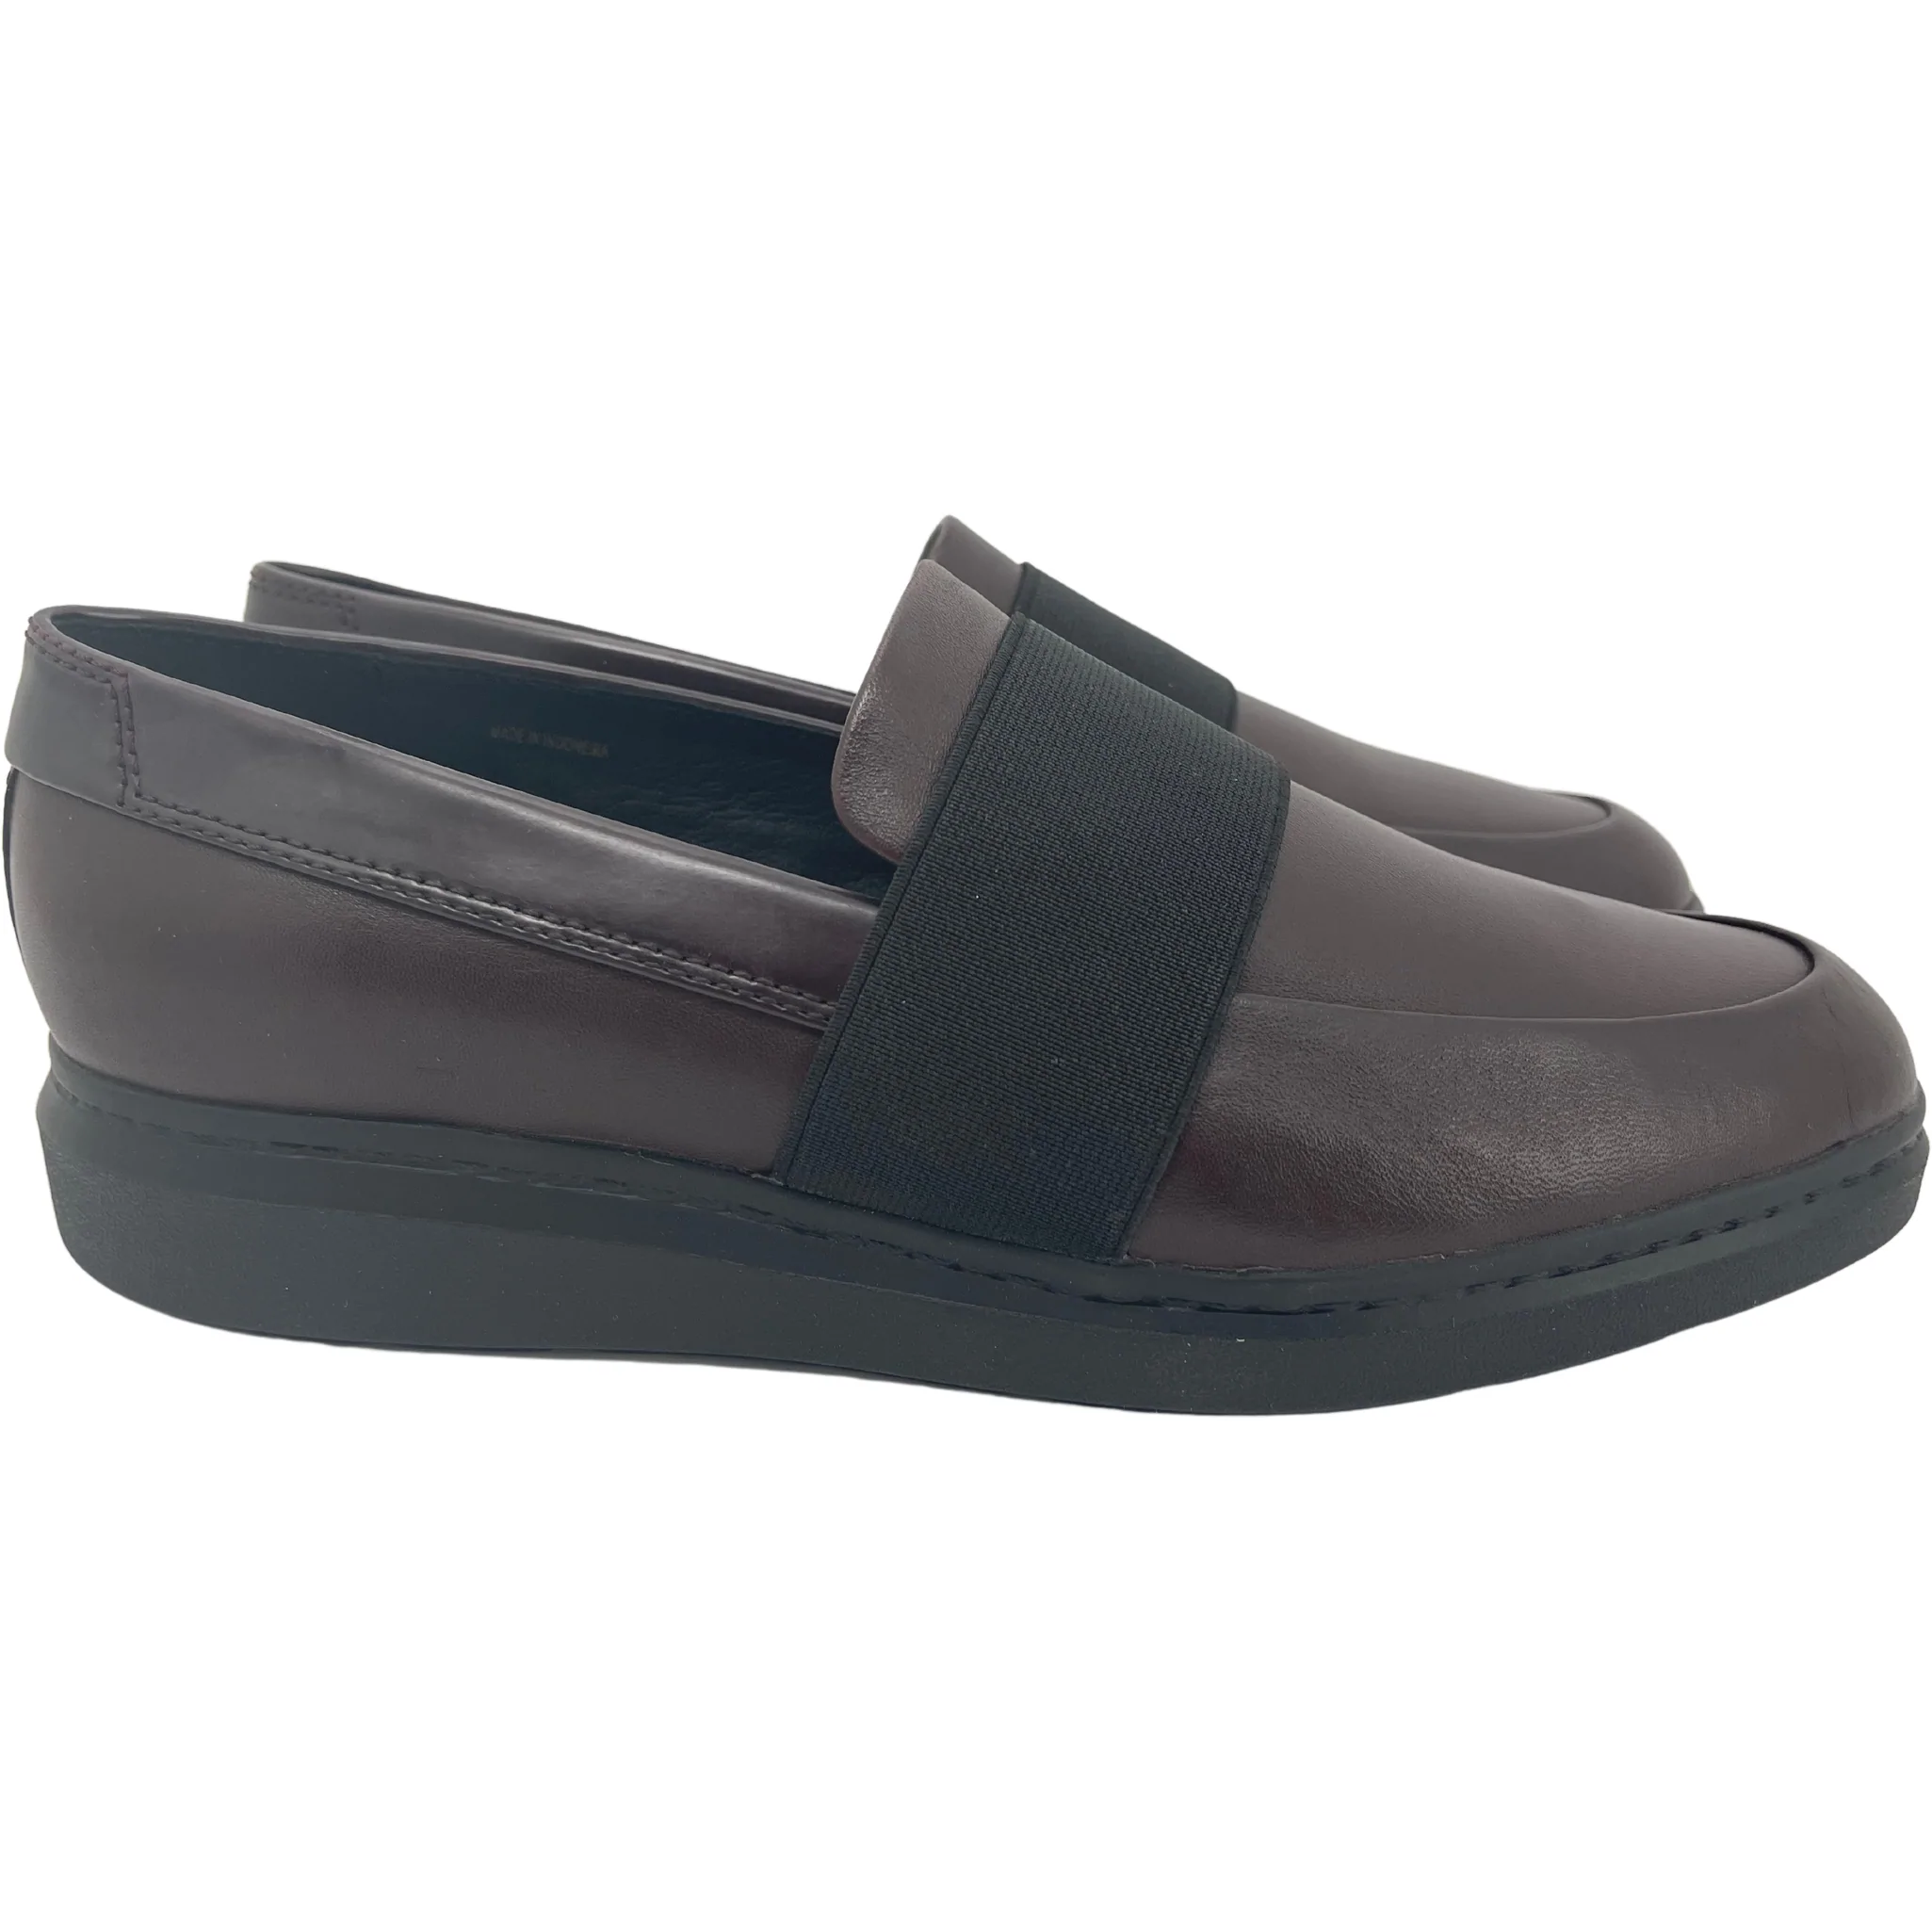 Geox Women's Loafer / D Jerrica B / Dark Burgundy & Black / Leather Shoe / Size 7.5 **No Tags**